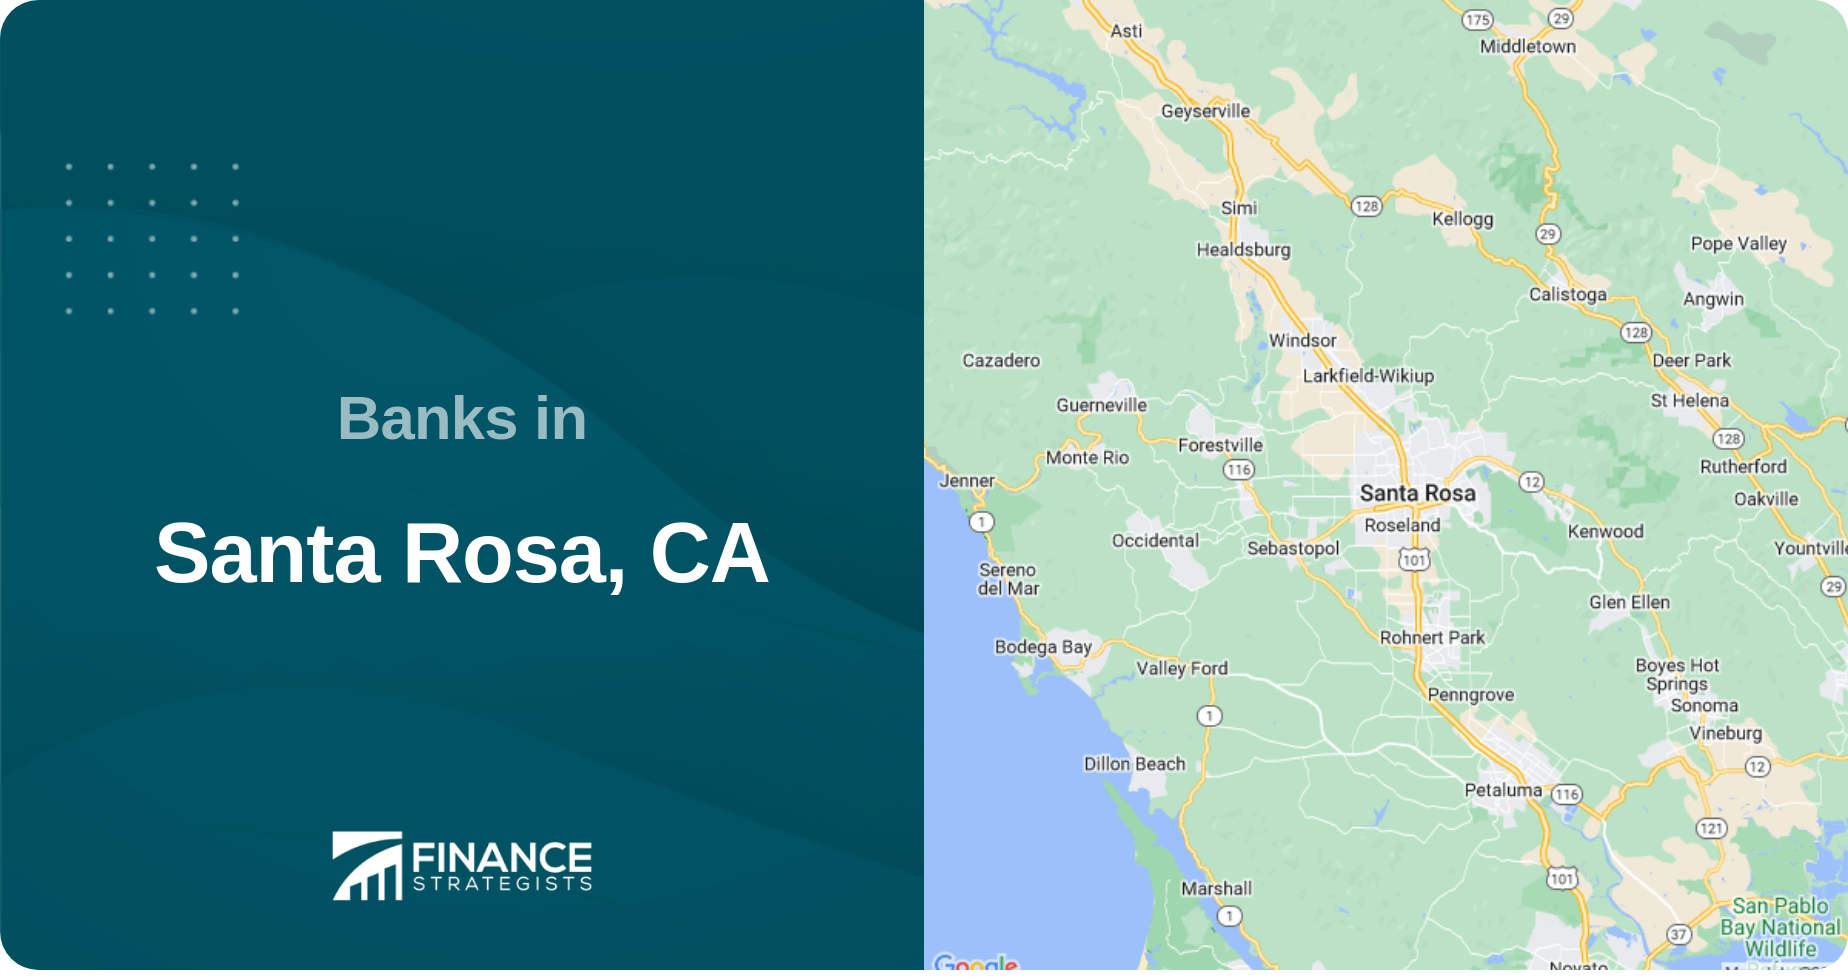 Banks in Santa Rosa, CA